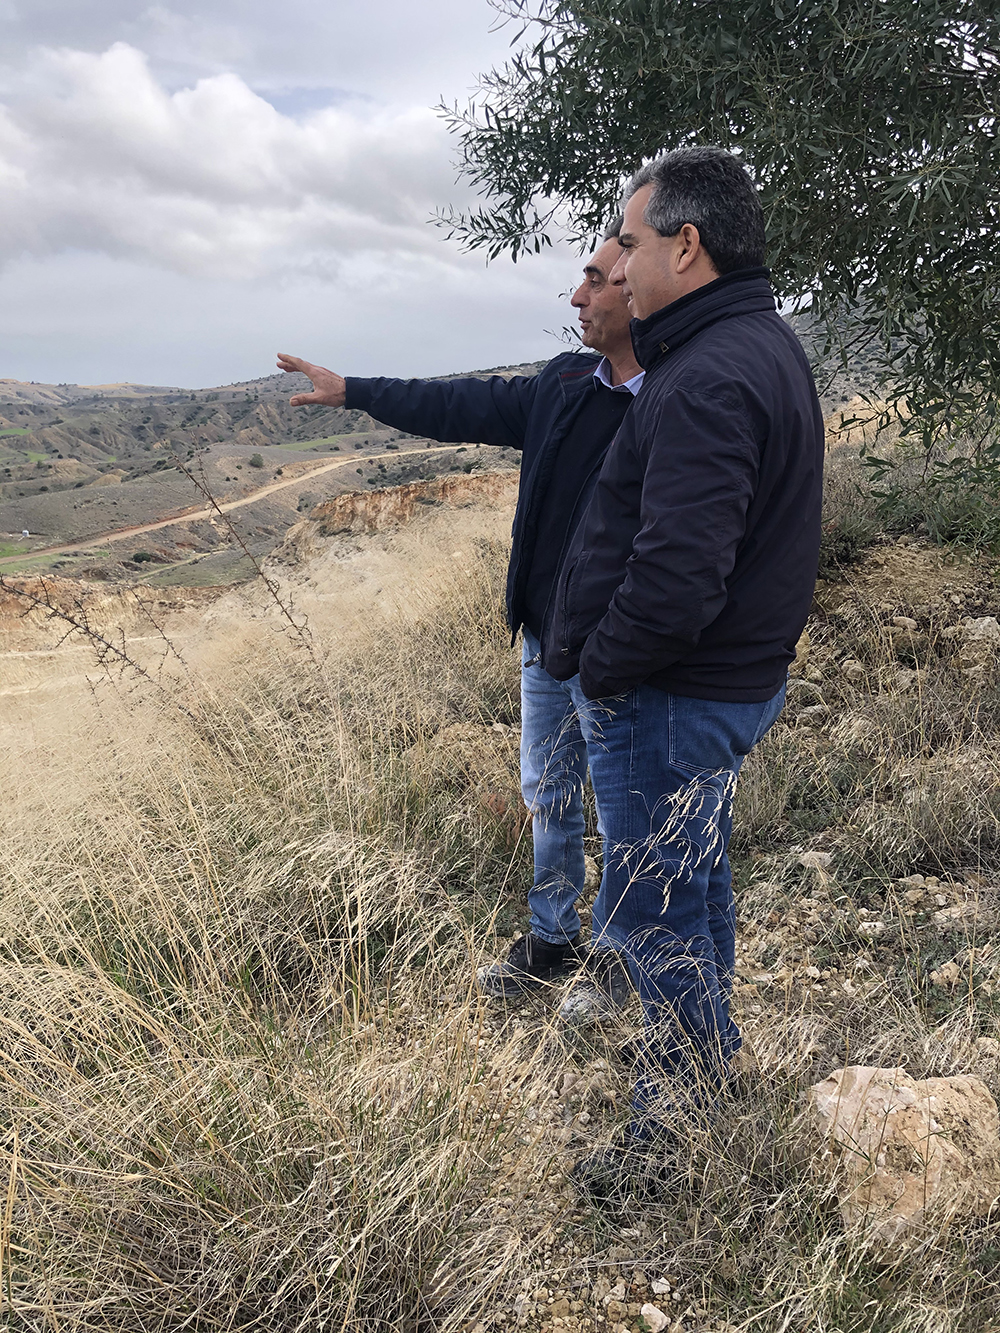 Demetris Vattis and Antonis Latouros surveying the quarrying landscape in Mistero